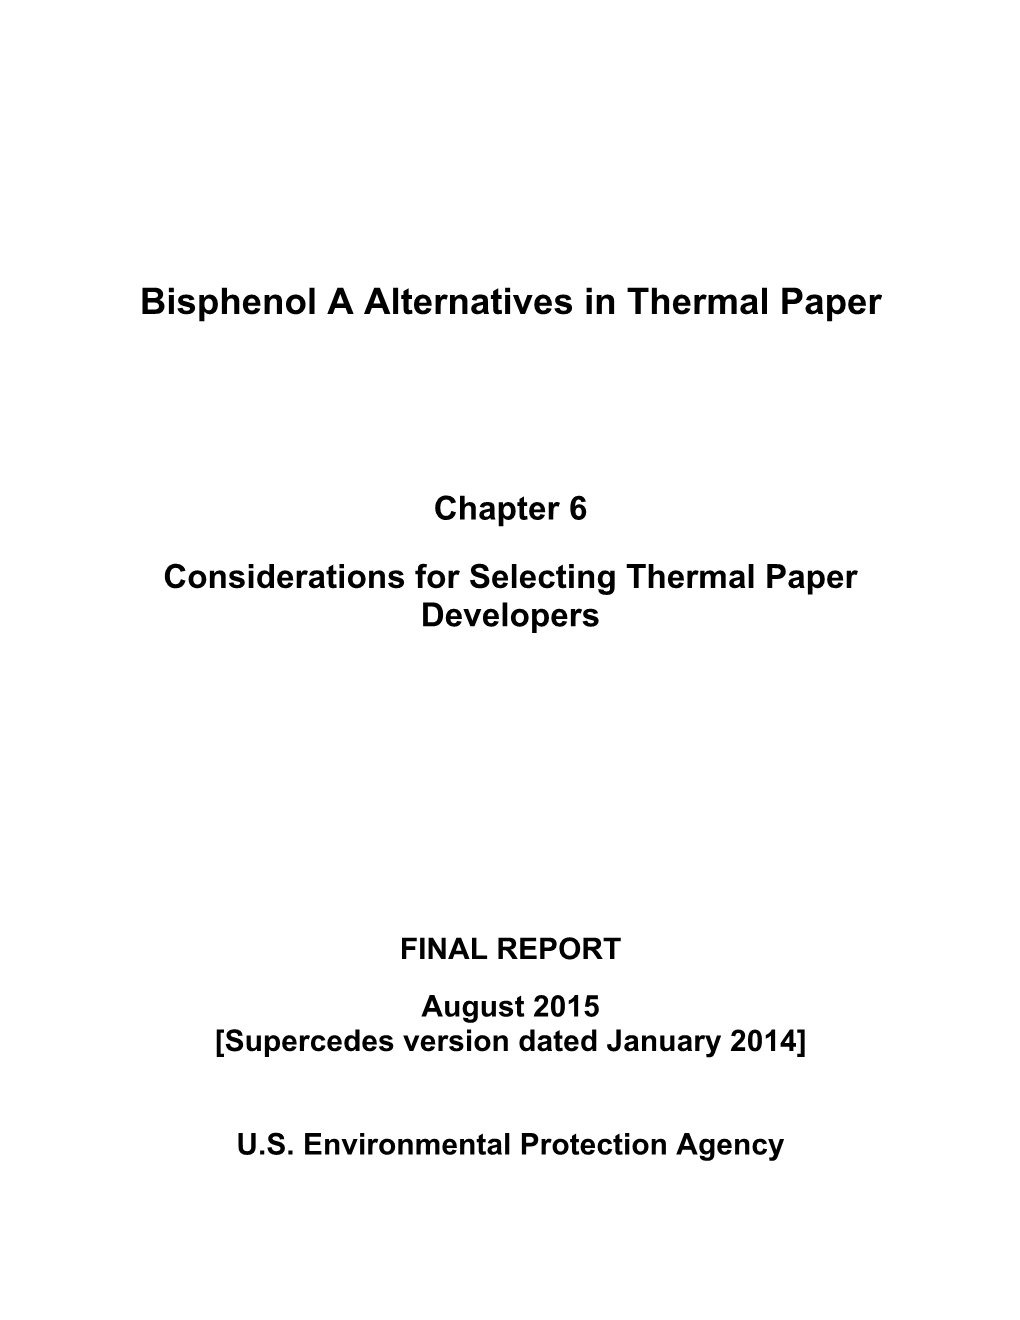 Bisphenol a Alternatives in Thermal Paper